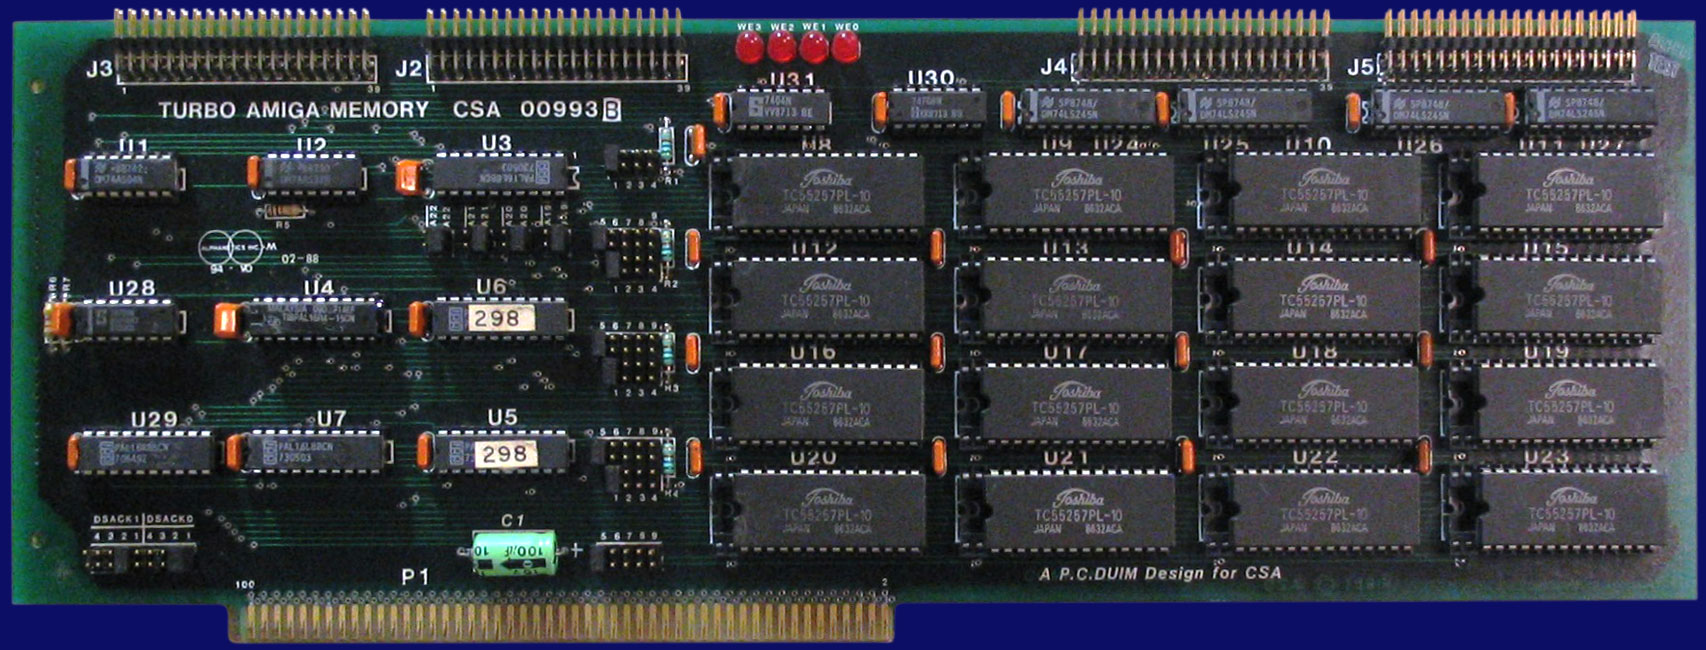 Computer System Associates Turbo Amiga CPU (A2000) - SRAM card, front side